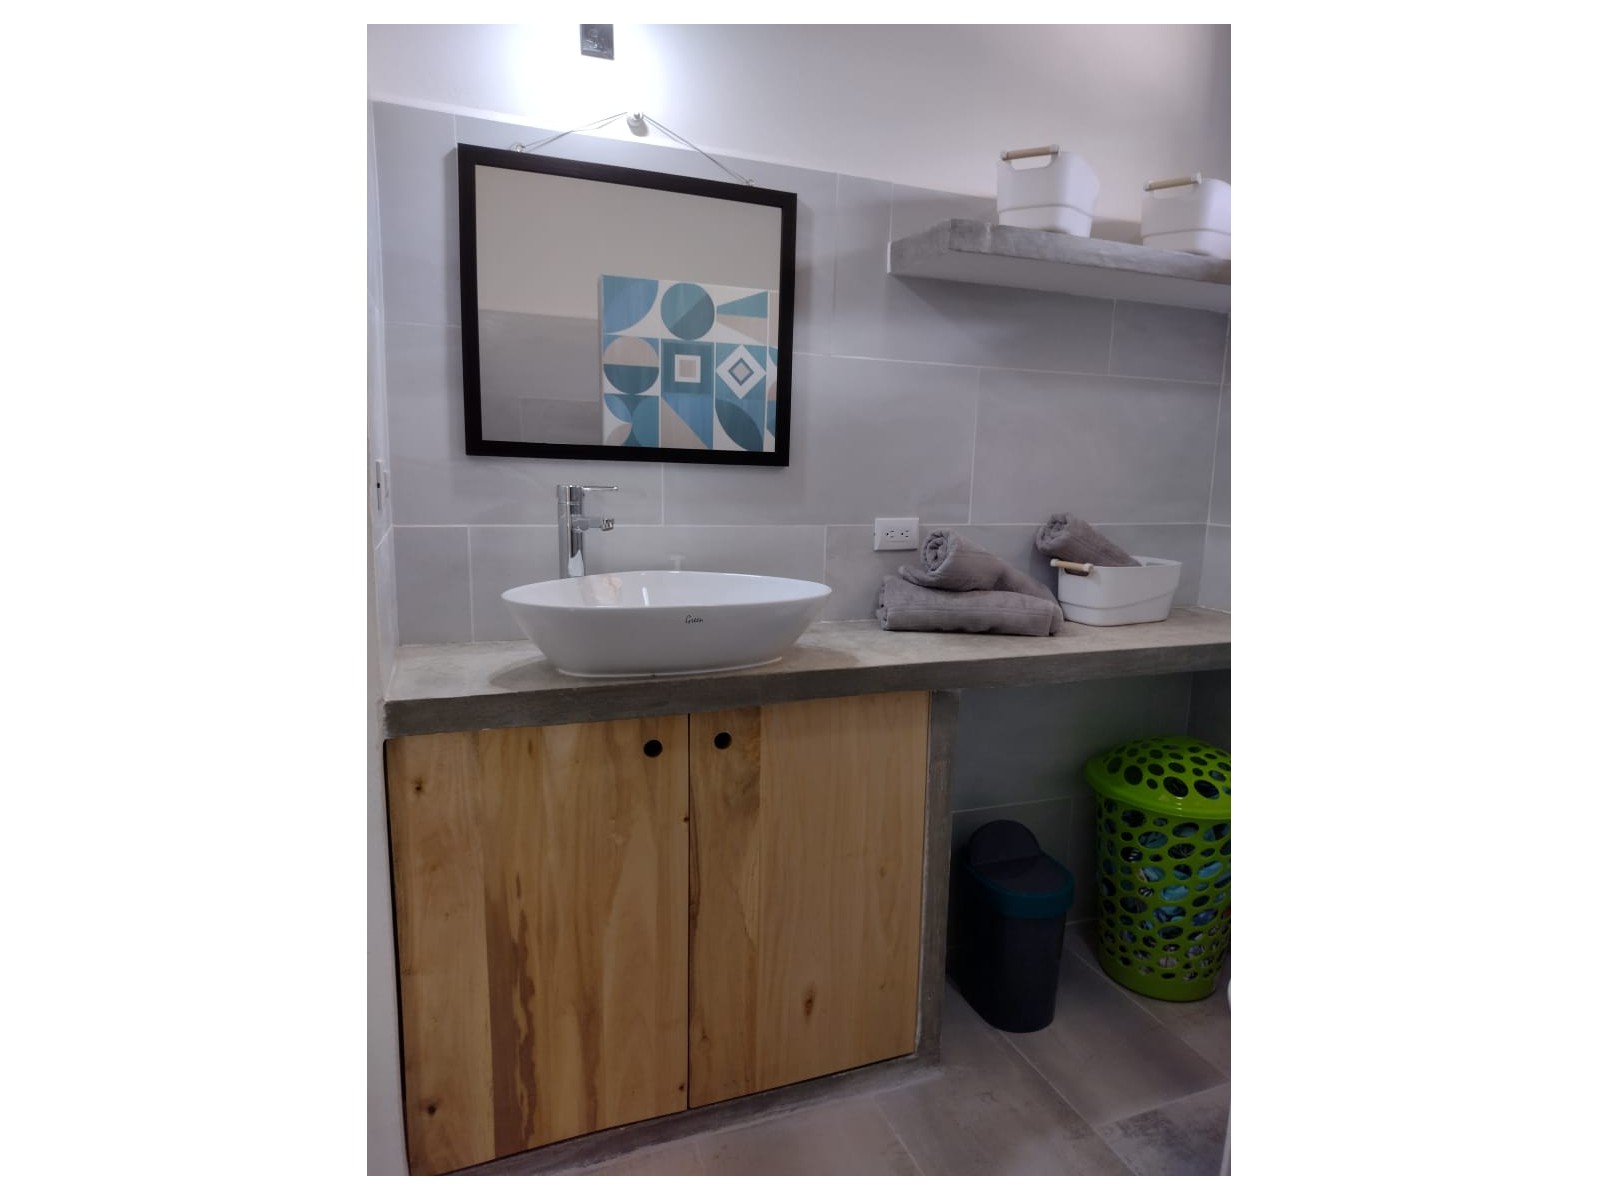 wooden furniture and white sink in Casa espinoza home for sale samara costa rica